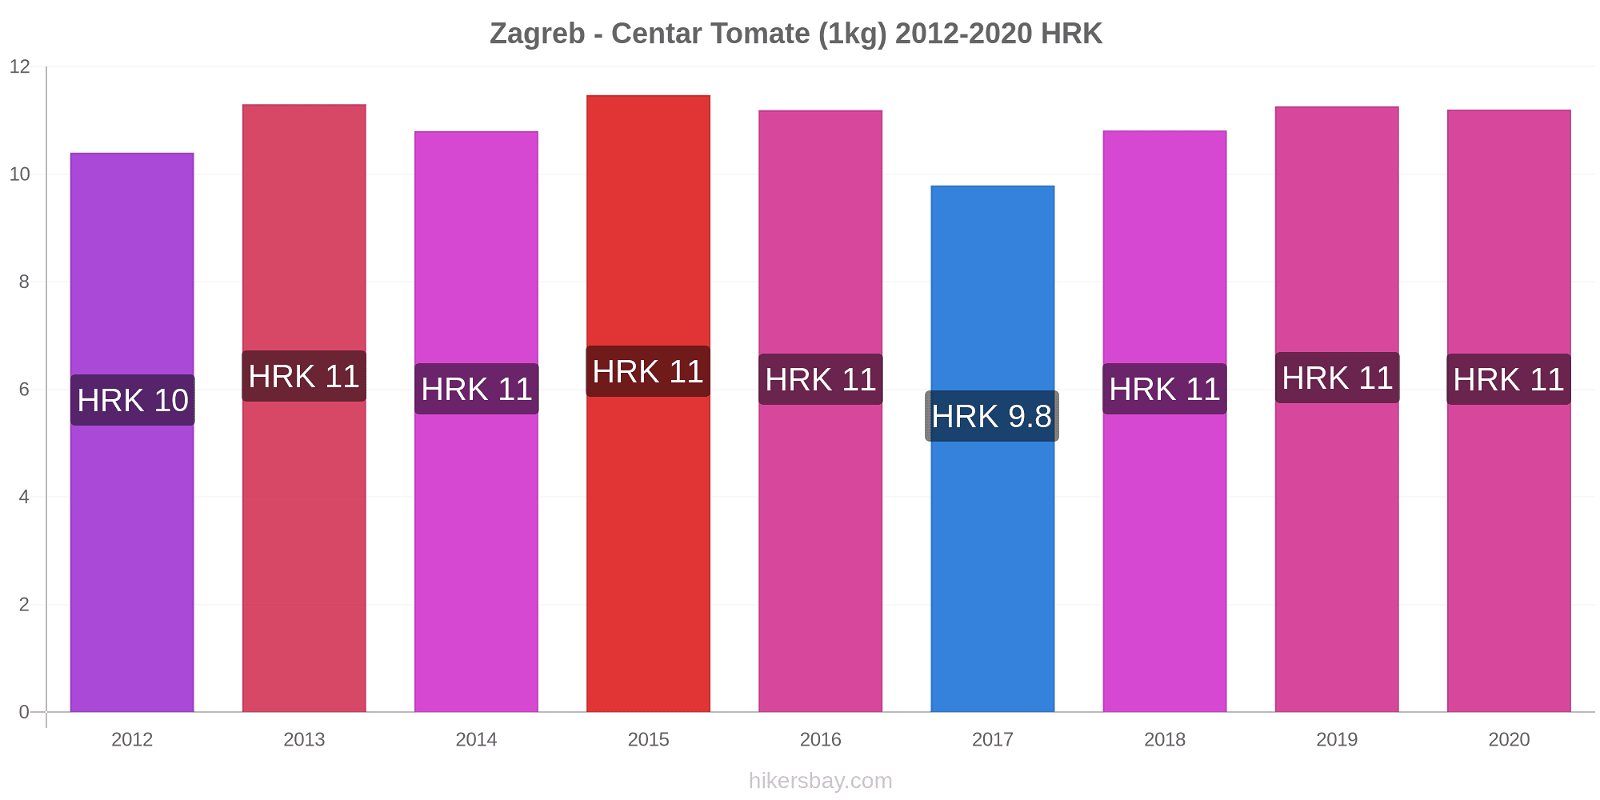 Zagreb - Centar modificări de preț Tomate (1kg) hikersbay.com